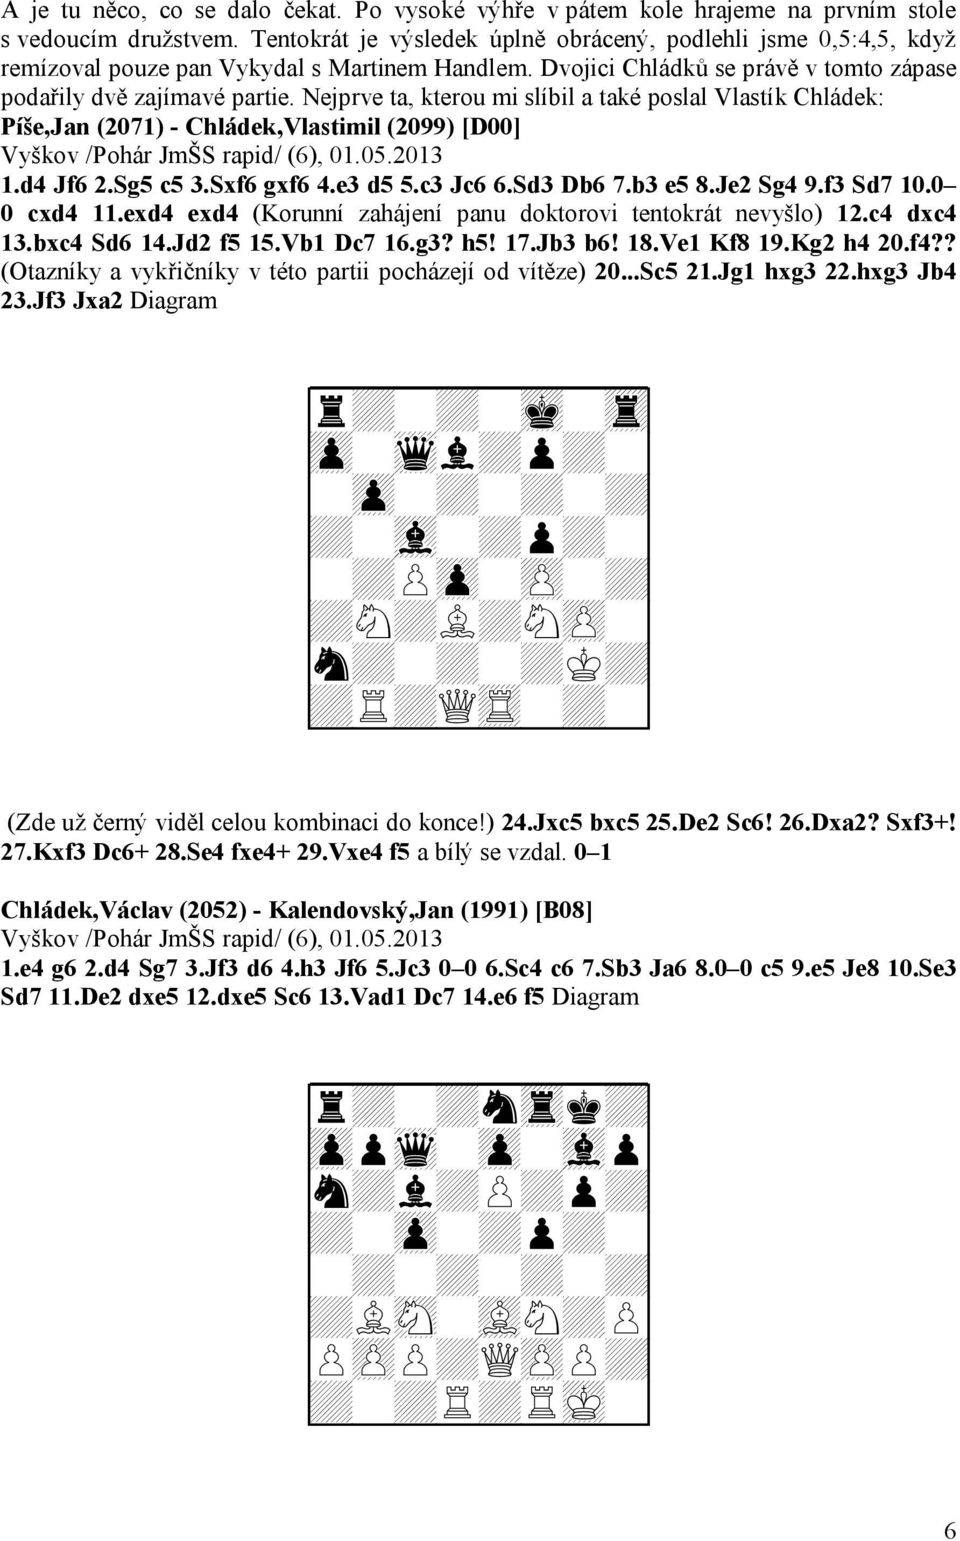 Nejprve ta, kterou mi slíbil a také poslal Vlastík Chládek: Píše,Jan (2071) - Chládek,Vlastimil (2099) [D00] Vyškov /Pohár JmŠS rapid/ (6), 01.05.2013 1.d4 Jf6 2.Sg5 c5 3.Sxf6 gxf6 4.e3 d5 5.c3 Jc6 6.